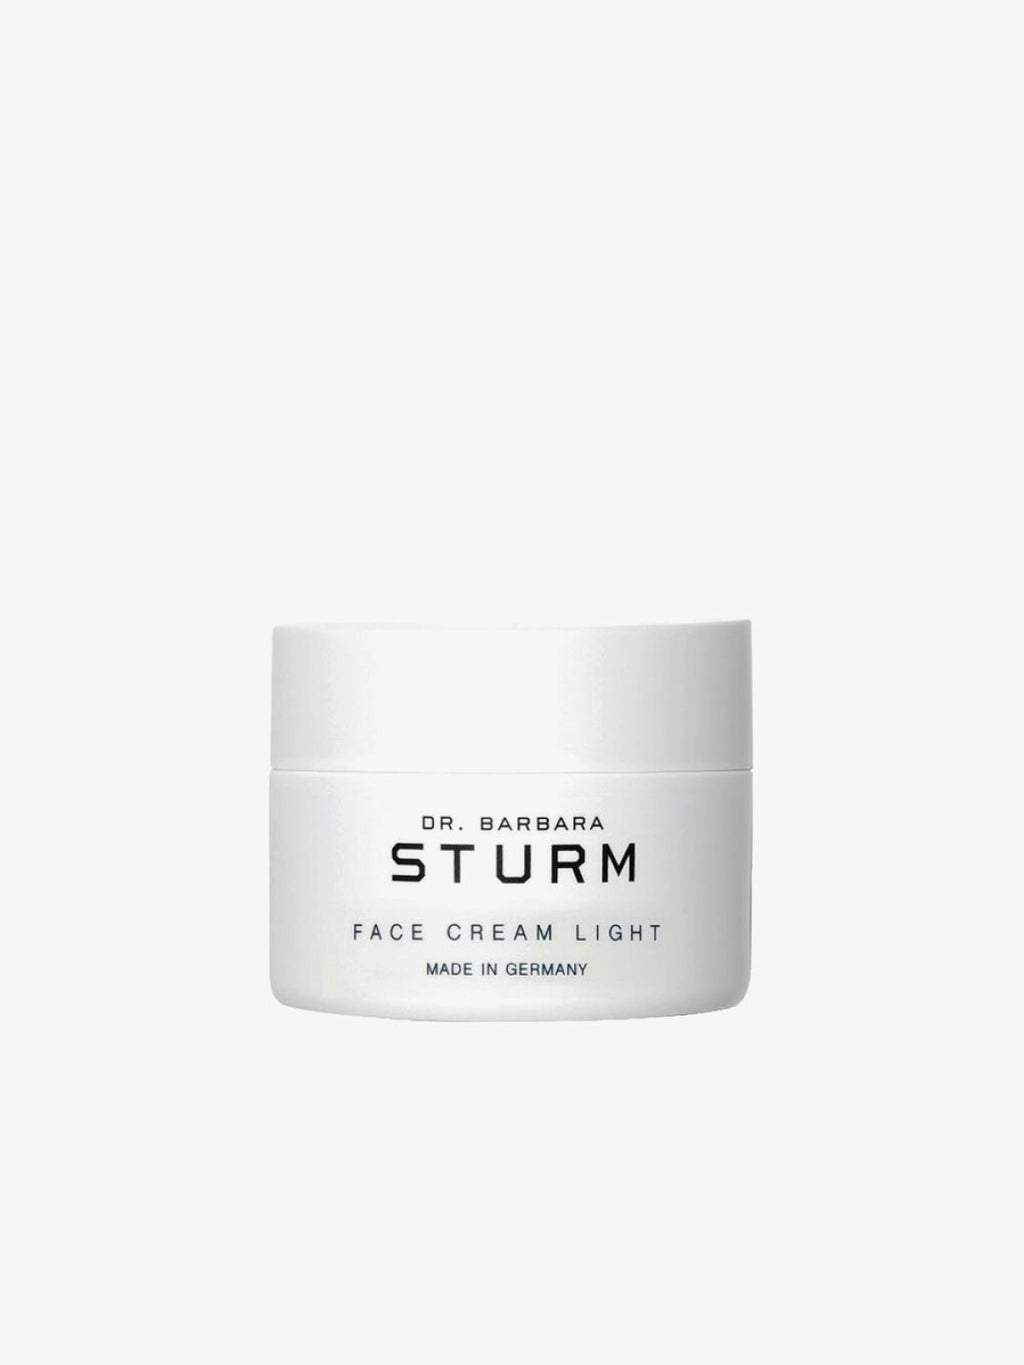 Dr. Barbara Sturm Face Cream Light | A